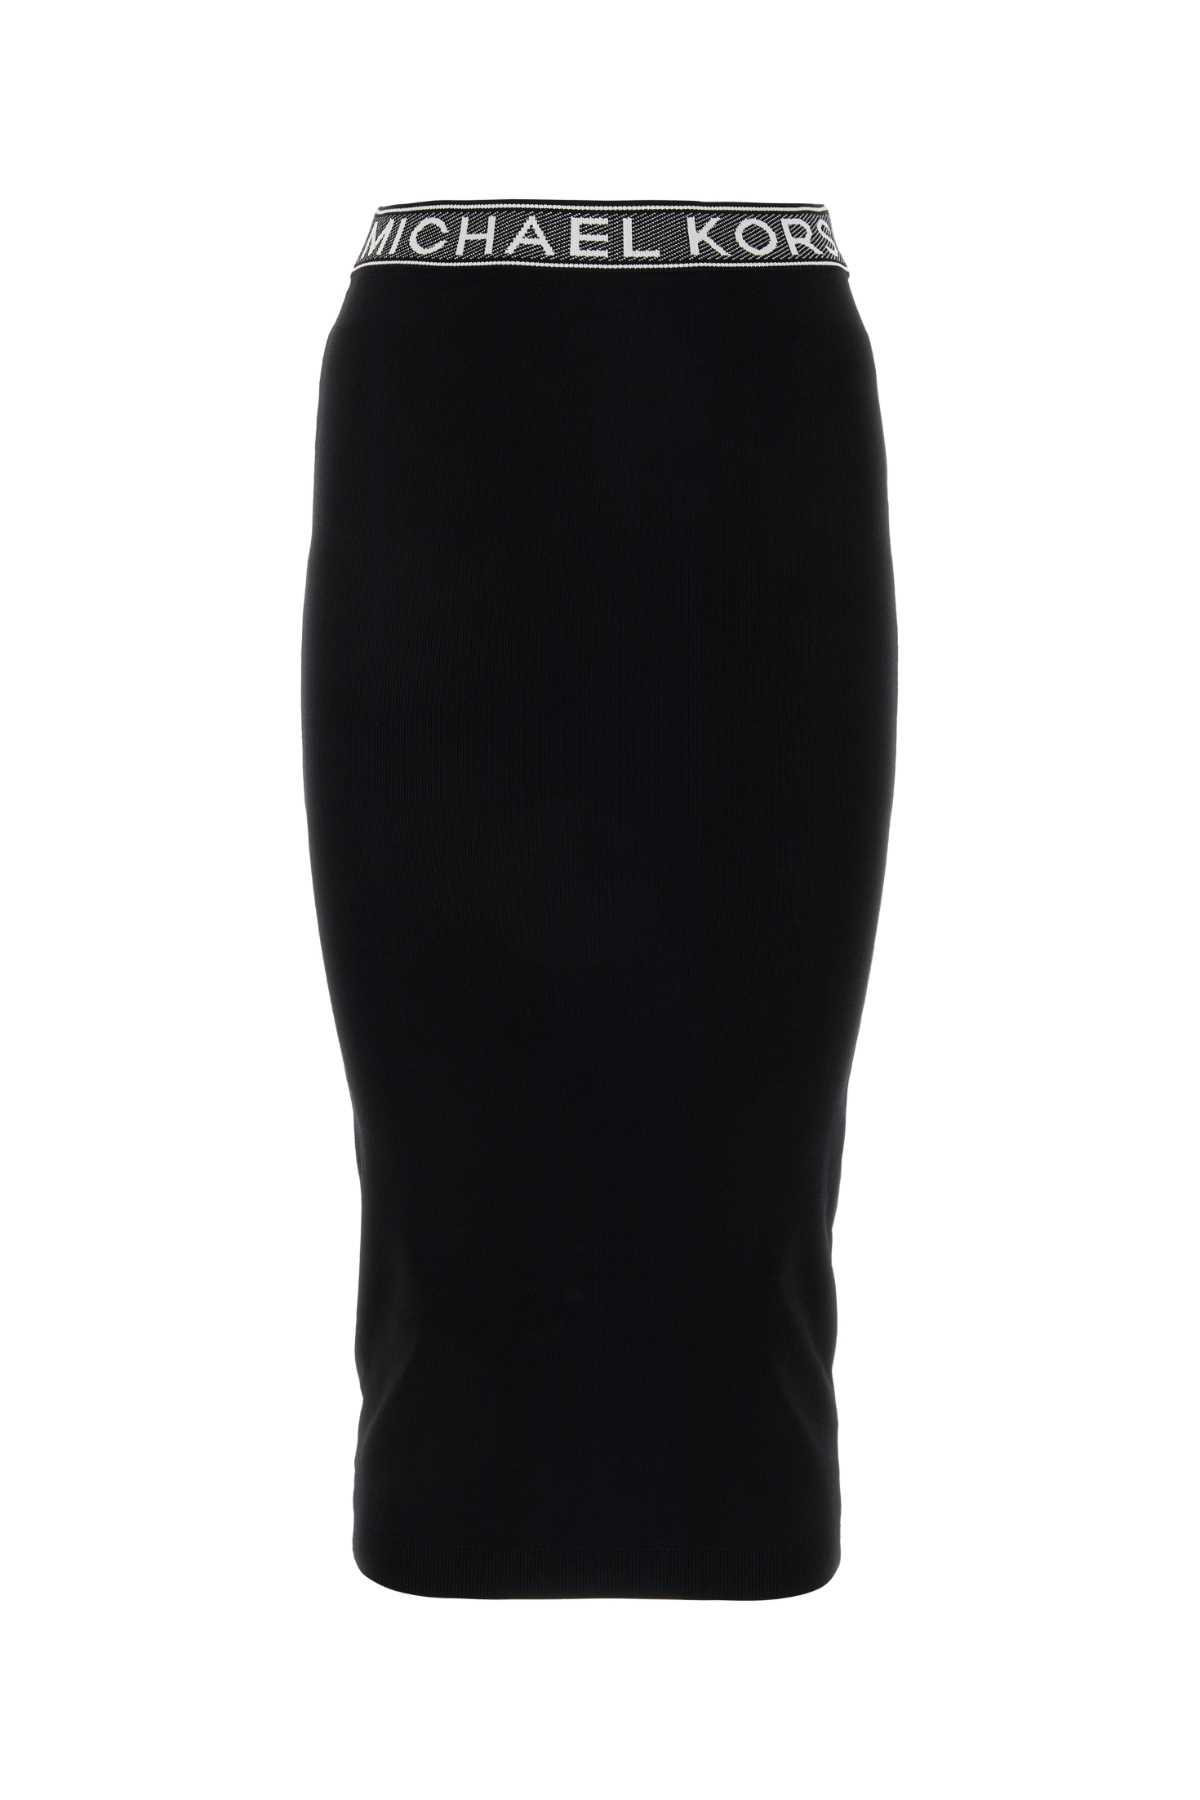 Black Stretch Viscose Blend Skirt